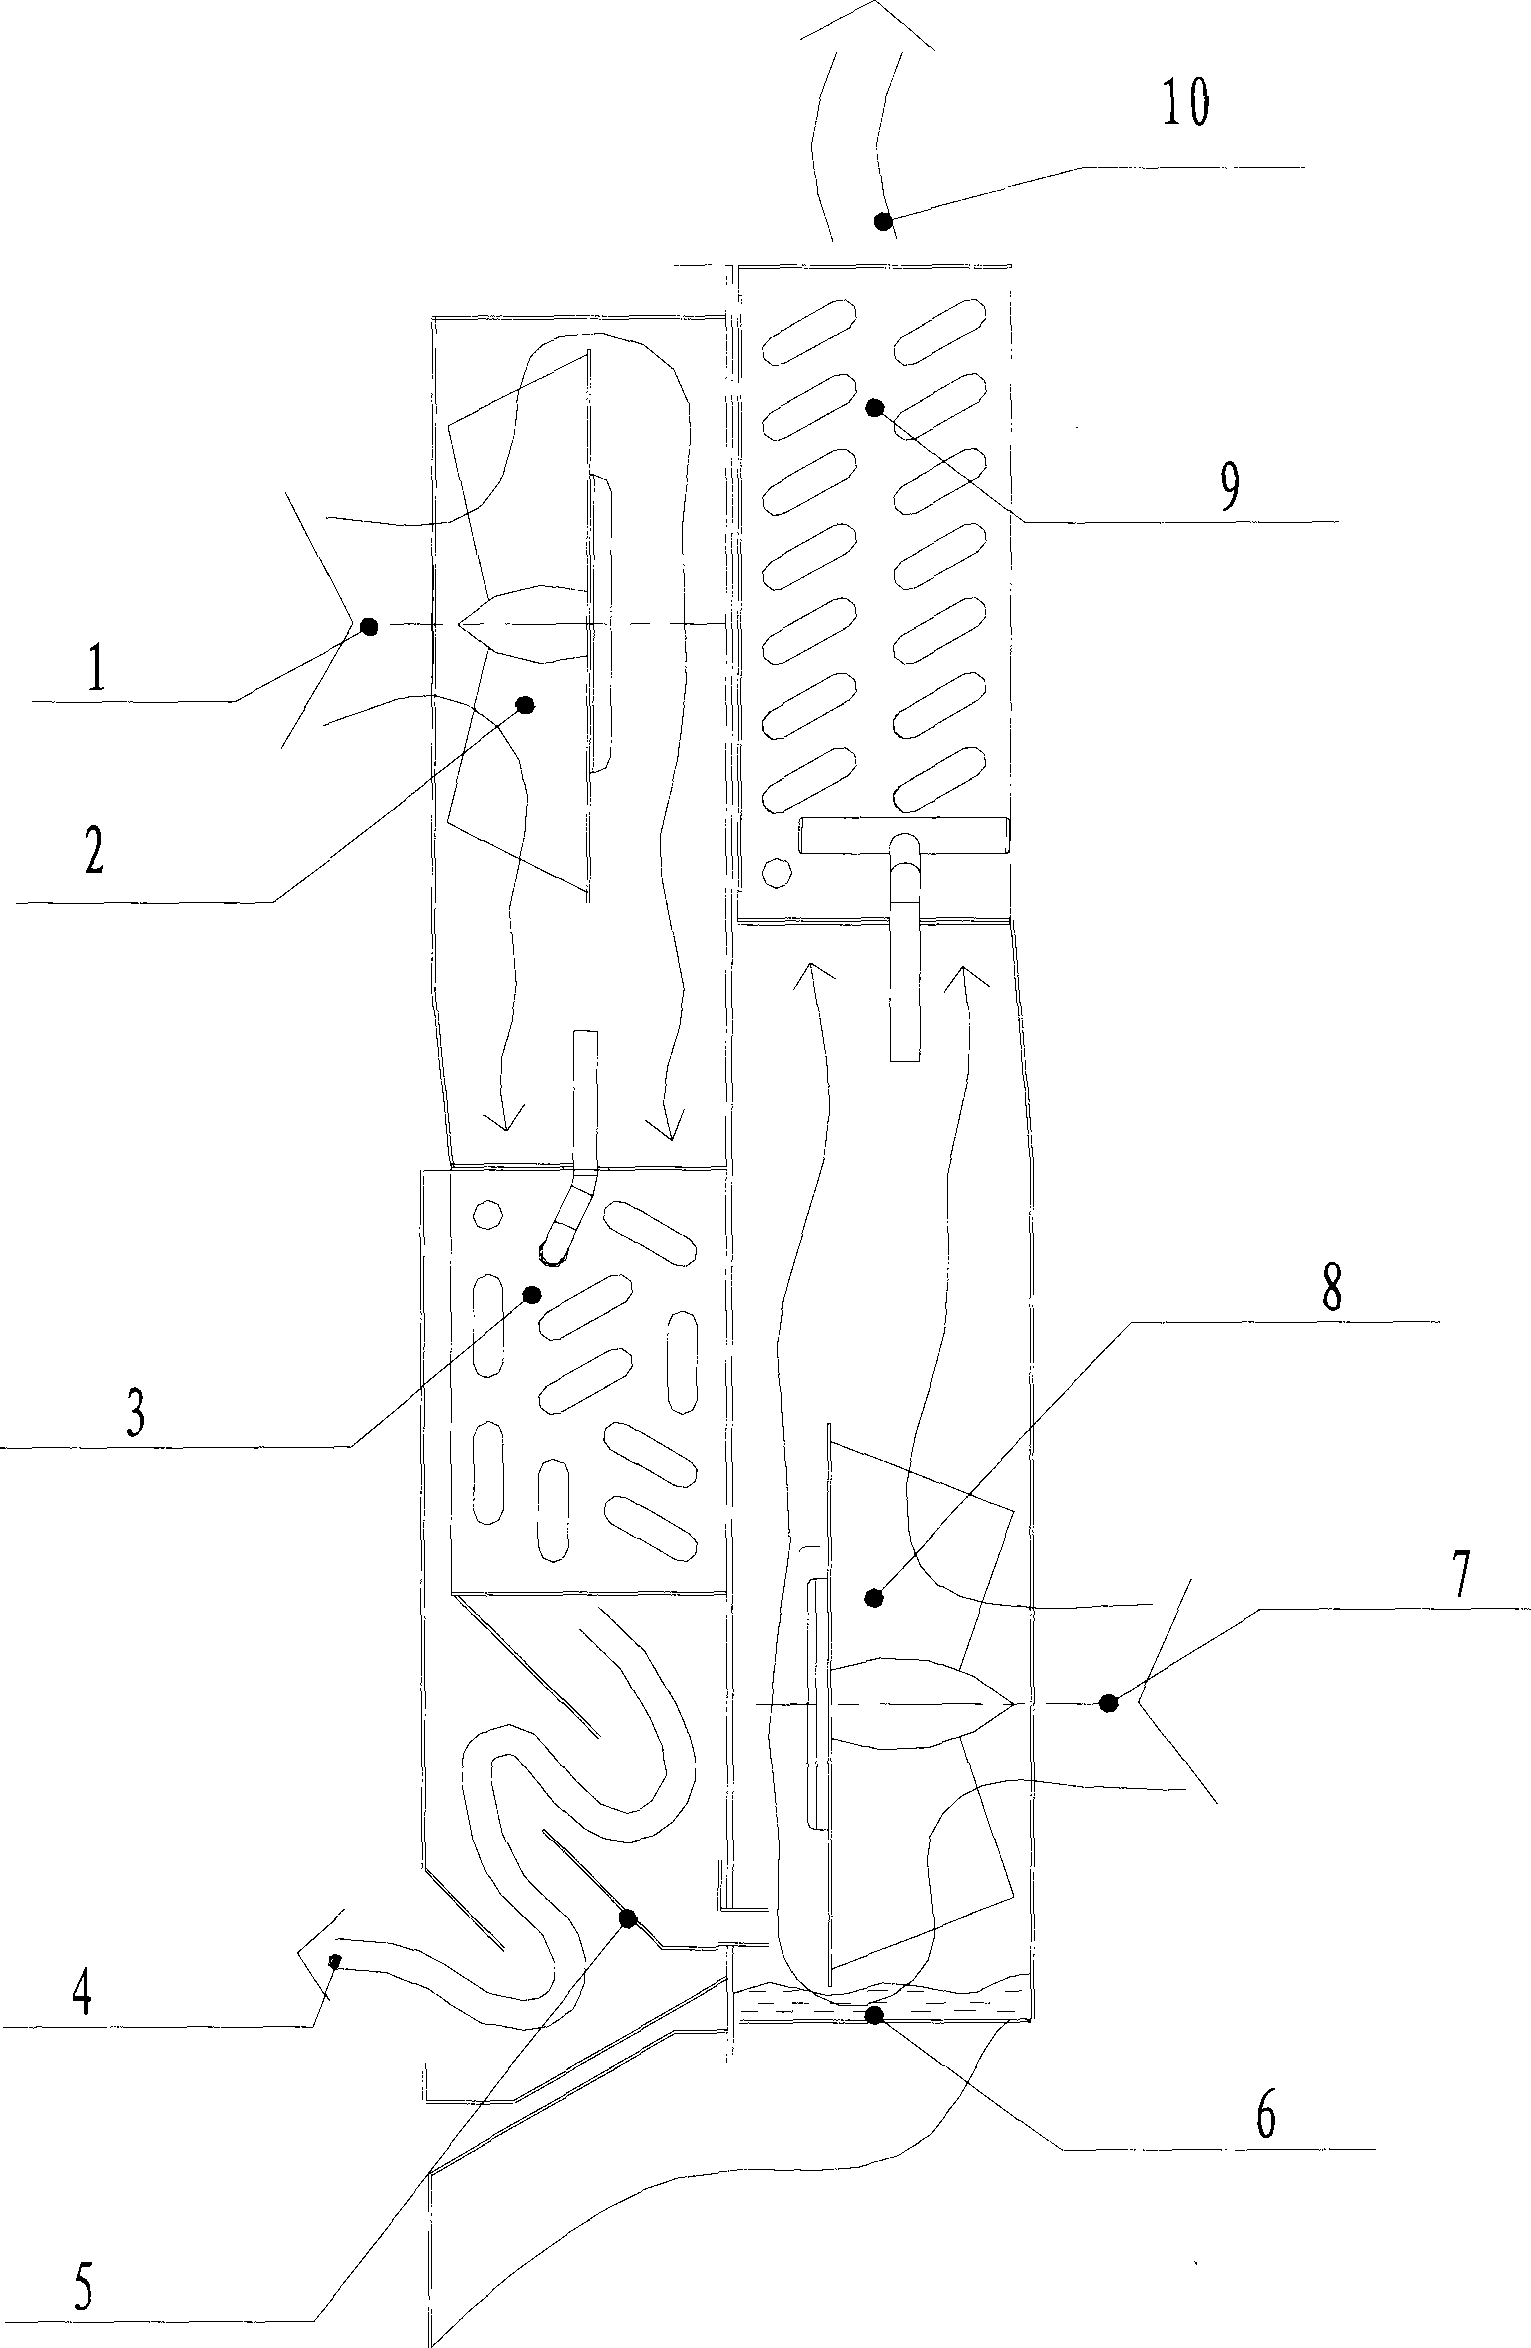 Self-volatilization system of evaporator condensation water